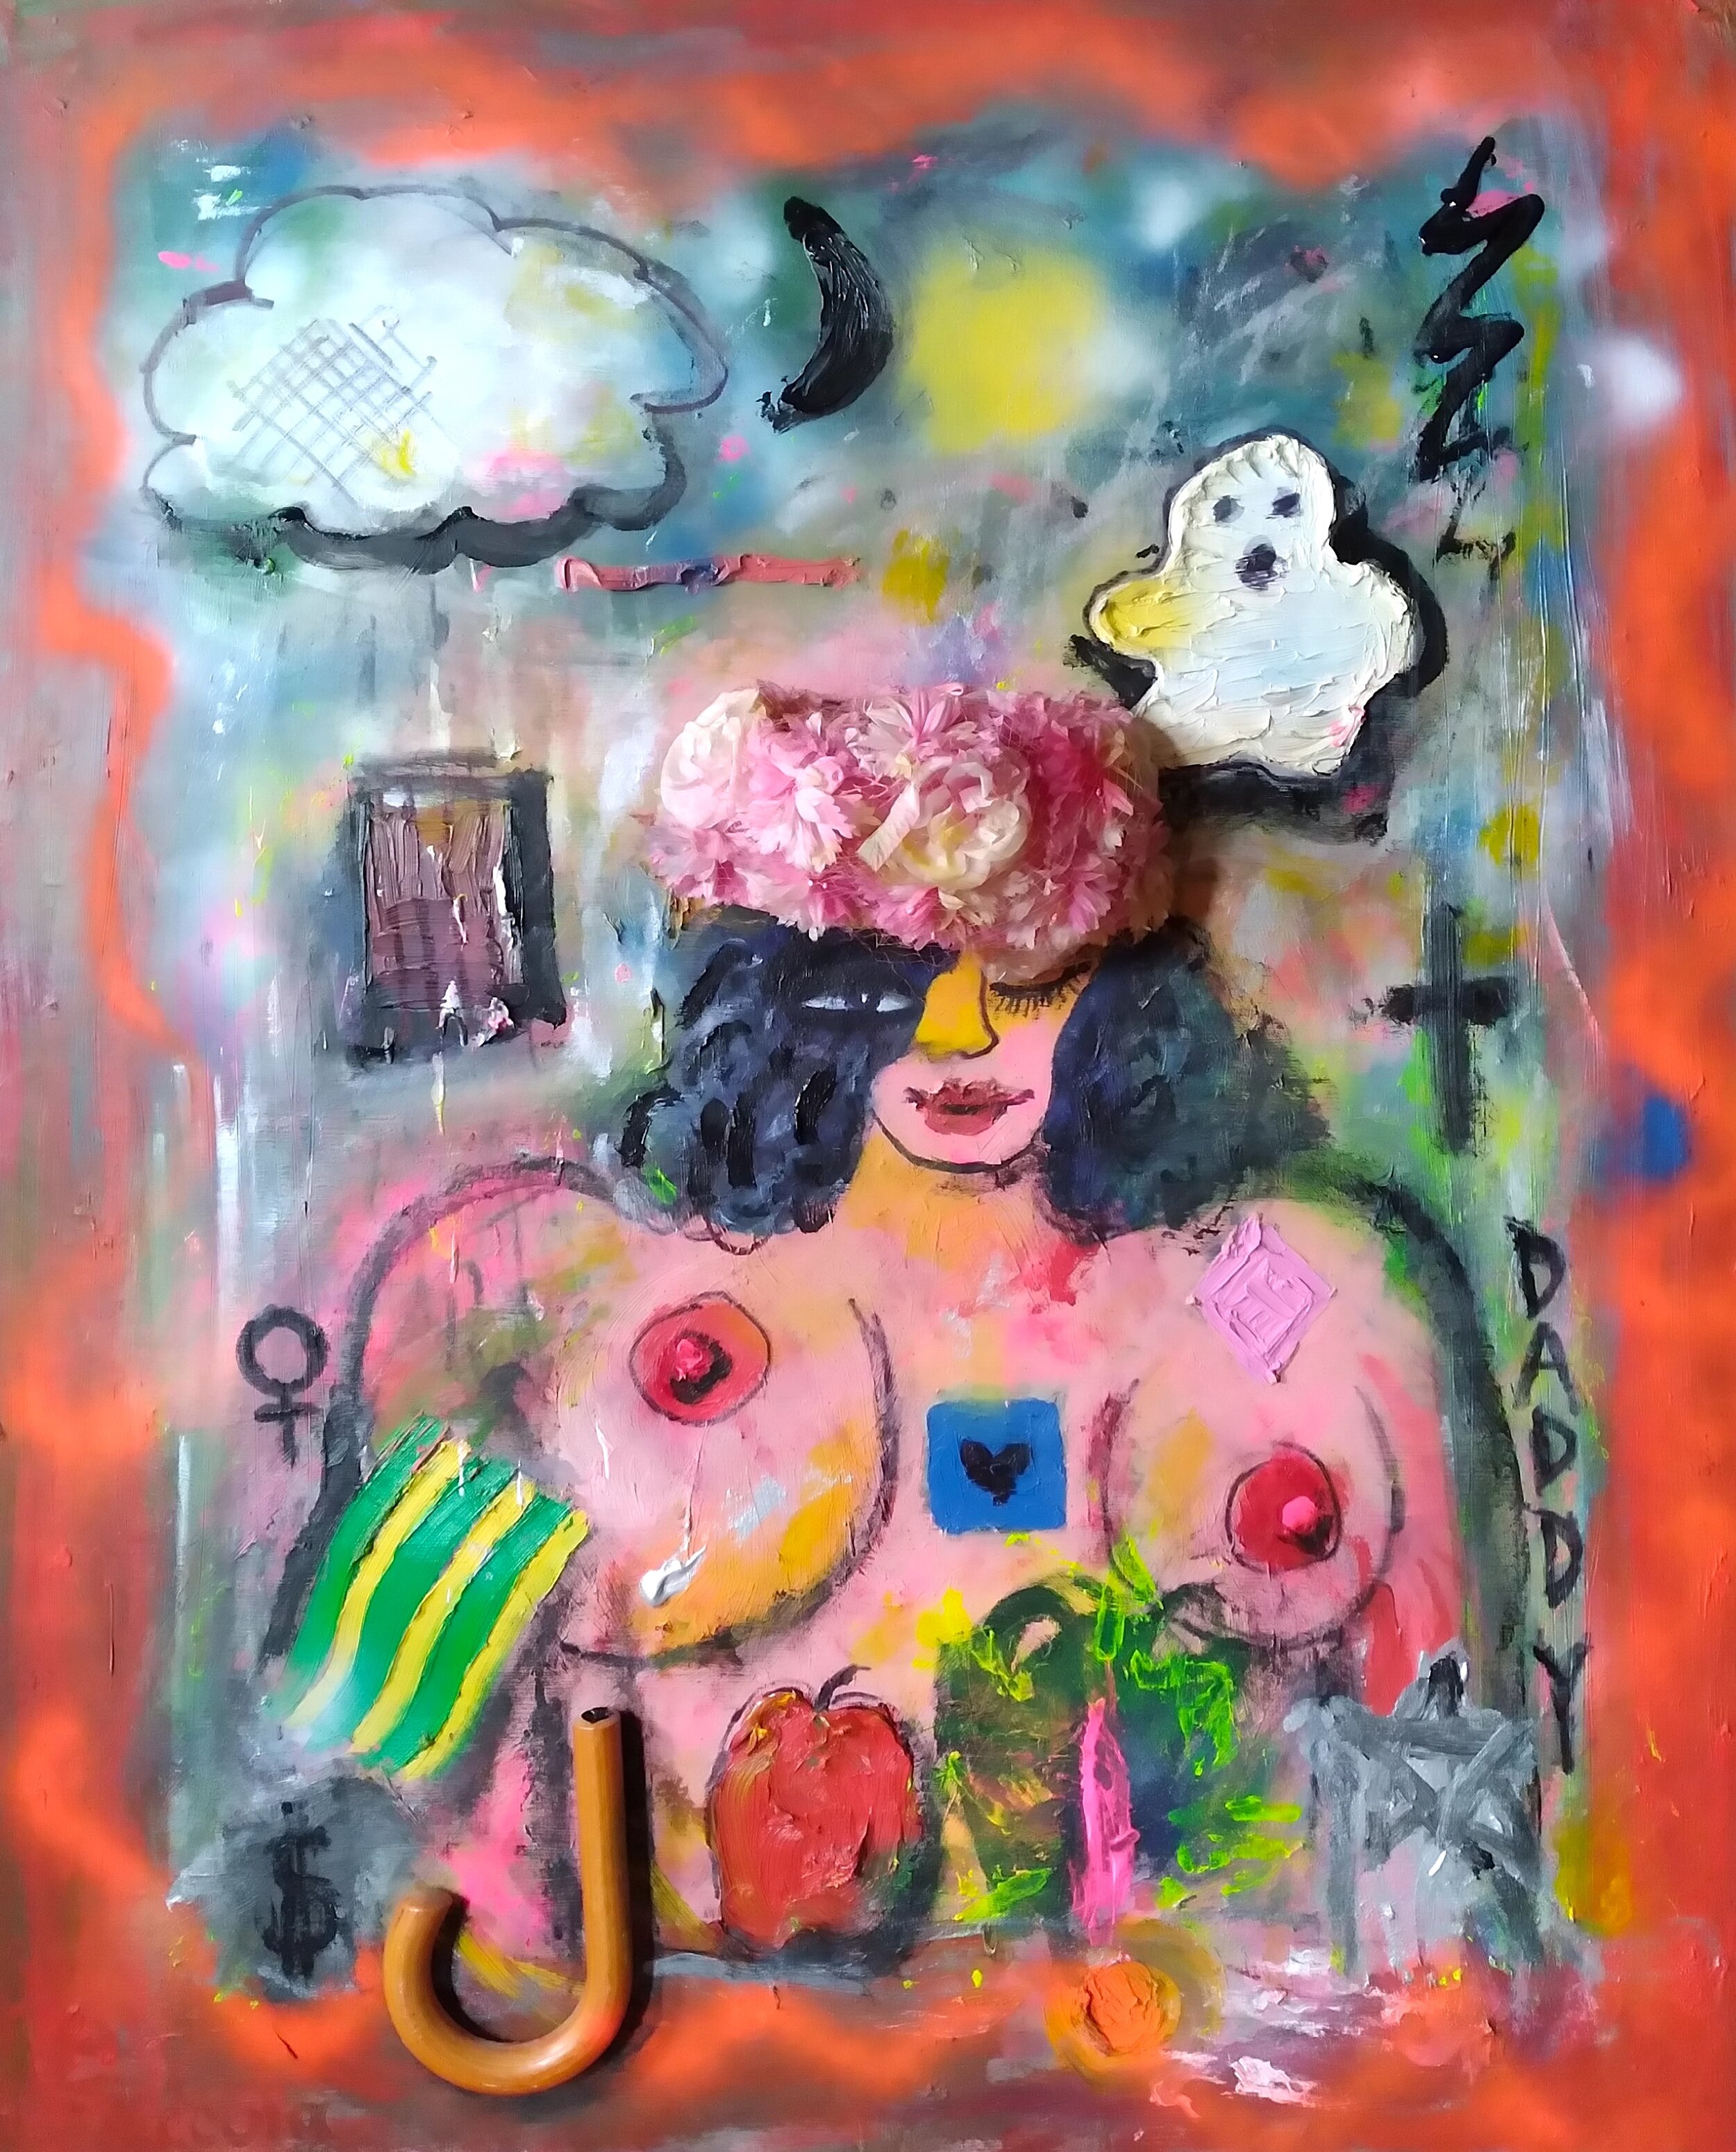 Sylvia Plath’s Hat, 2008. Oil, acrylic, hat on canvas. 46" x 36".